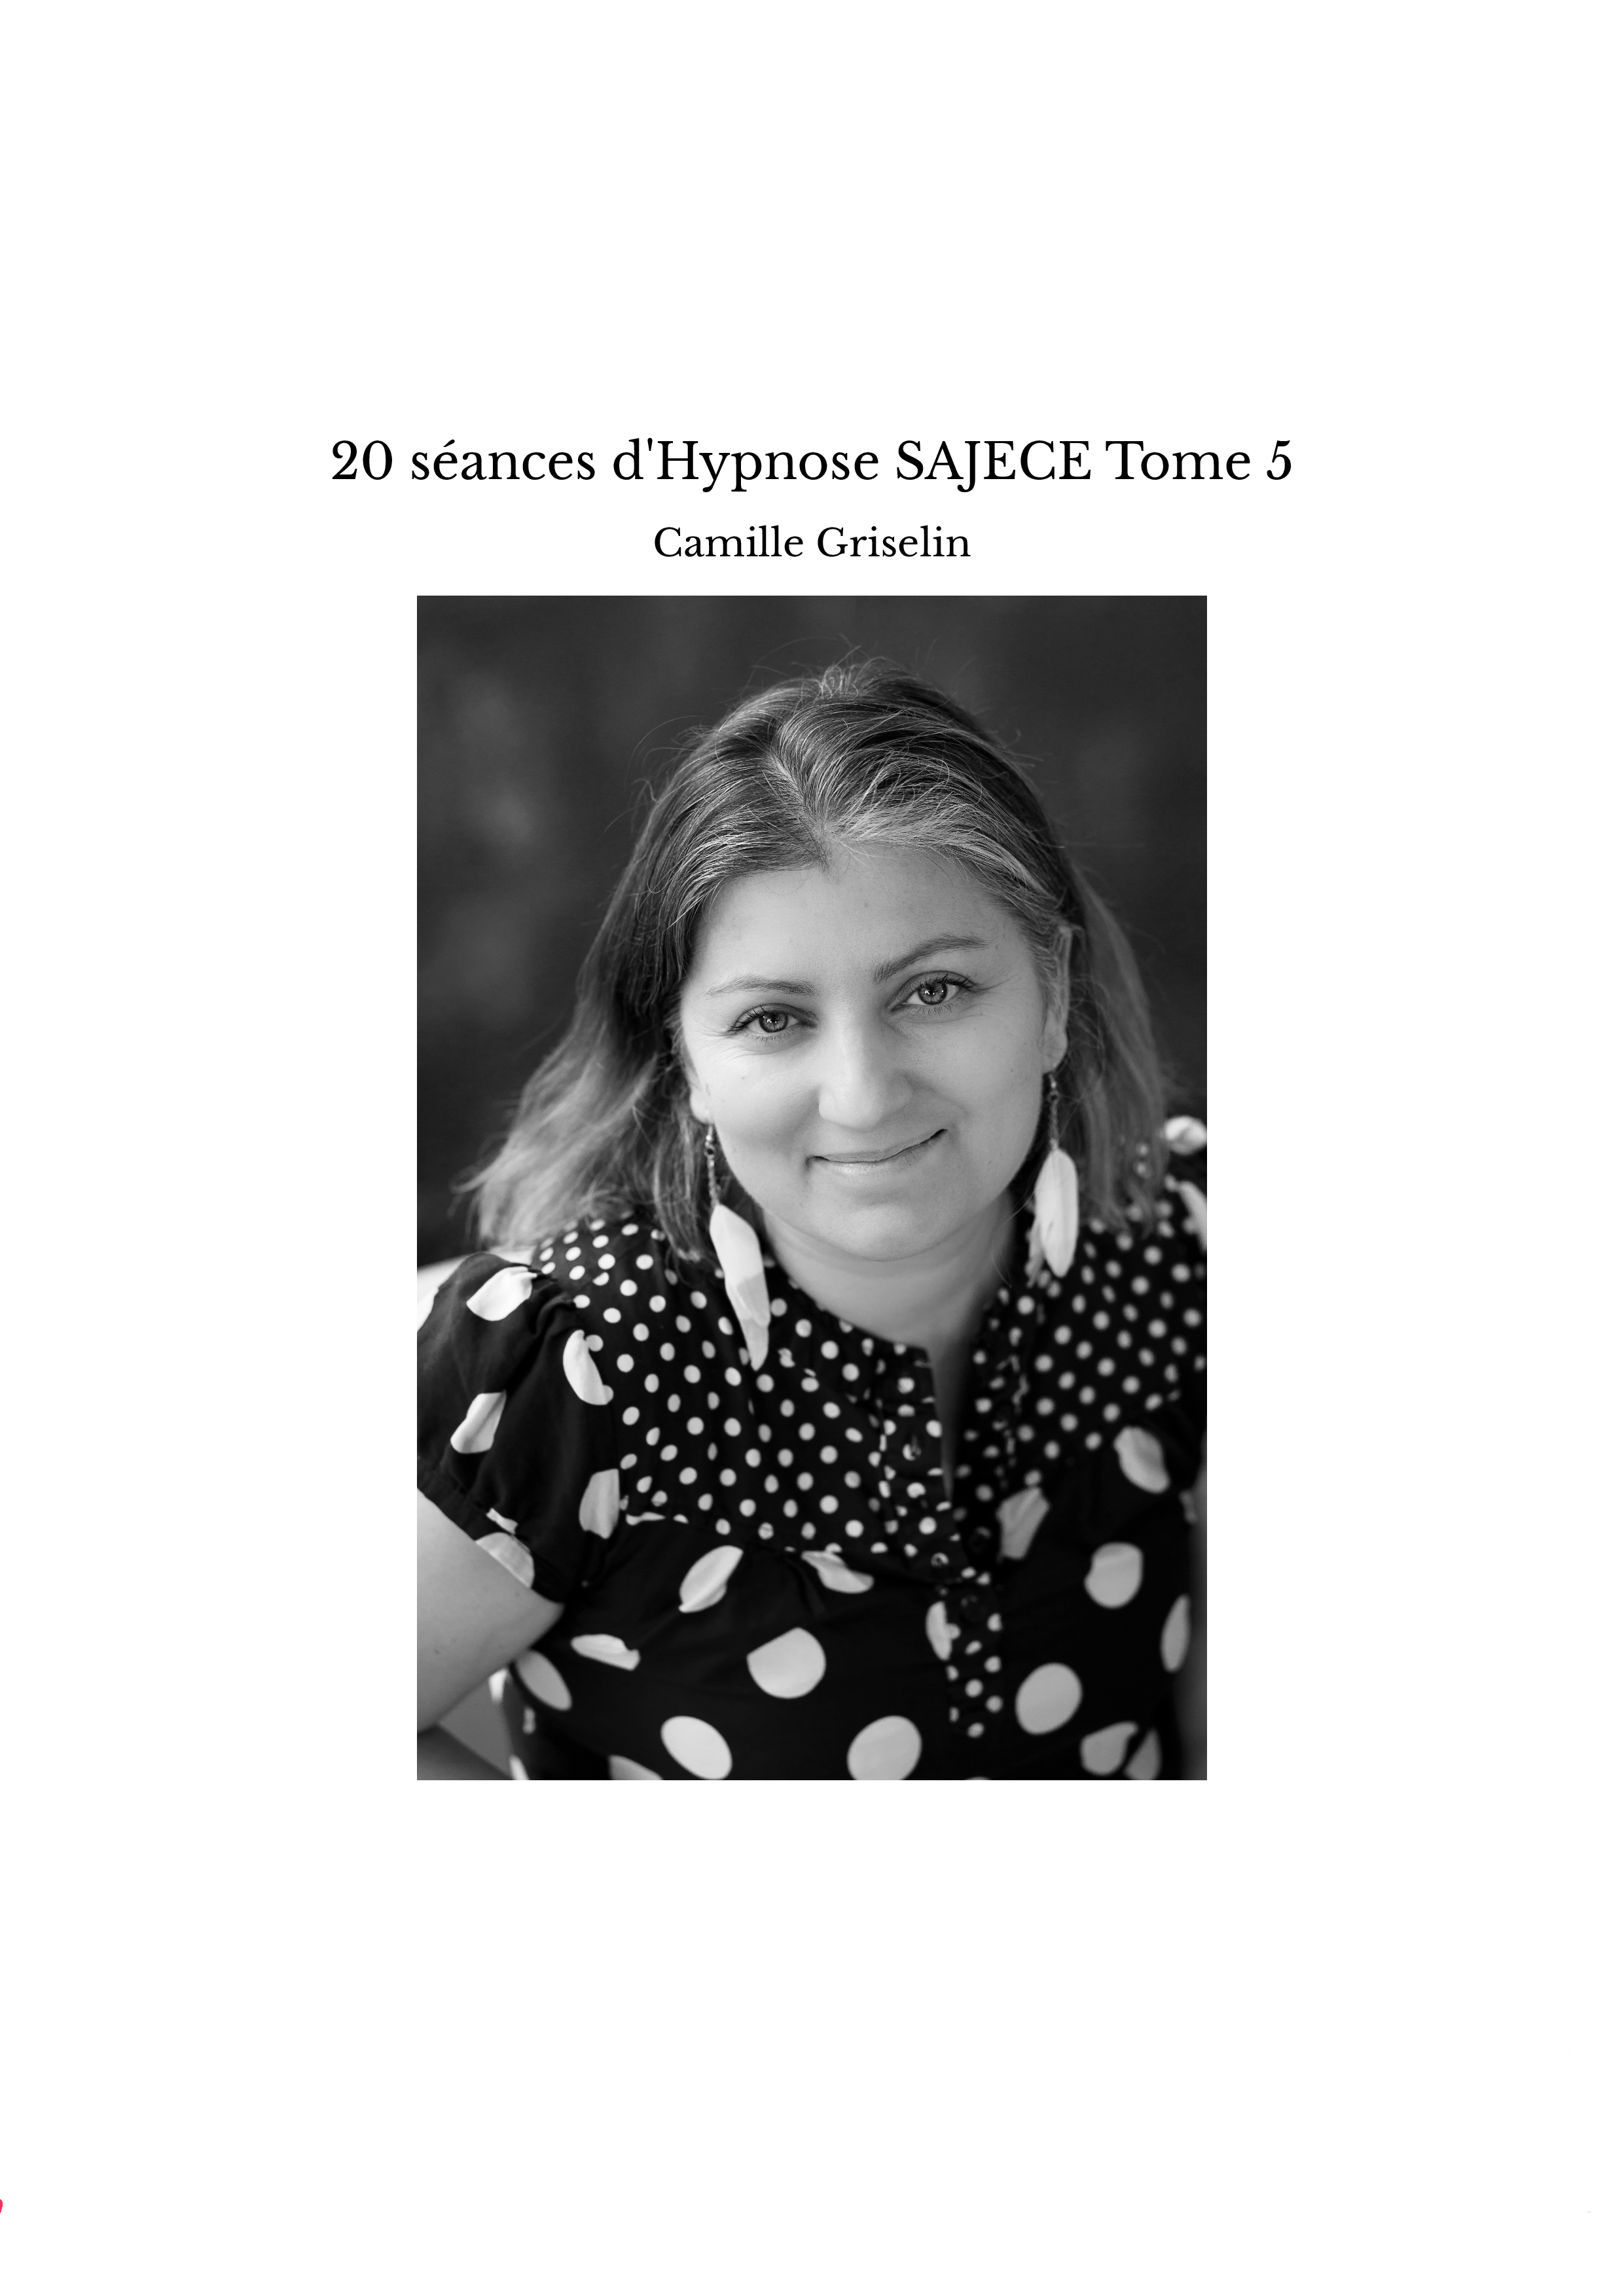 20 séances d'Hypnose SAJECE Tome 5